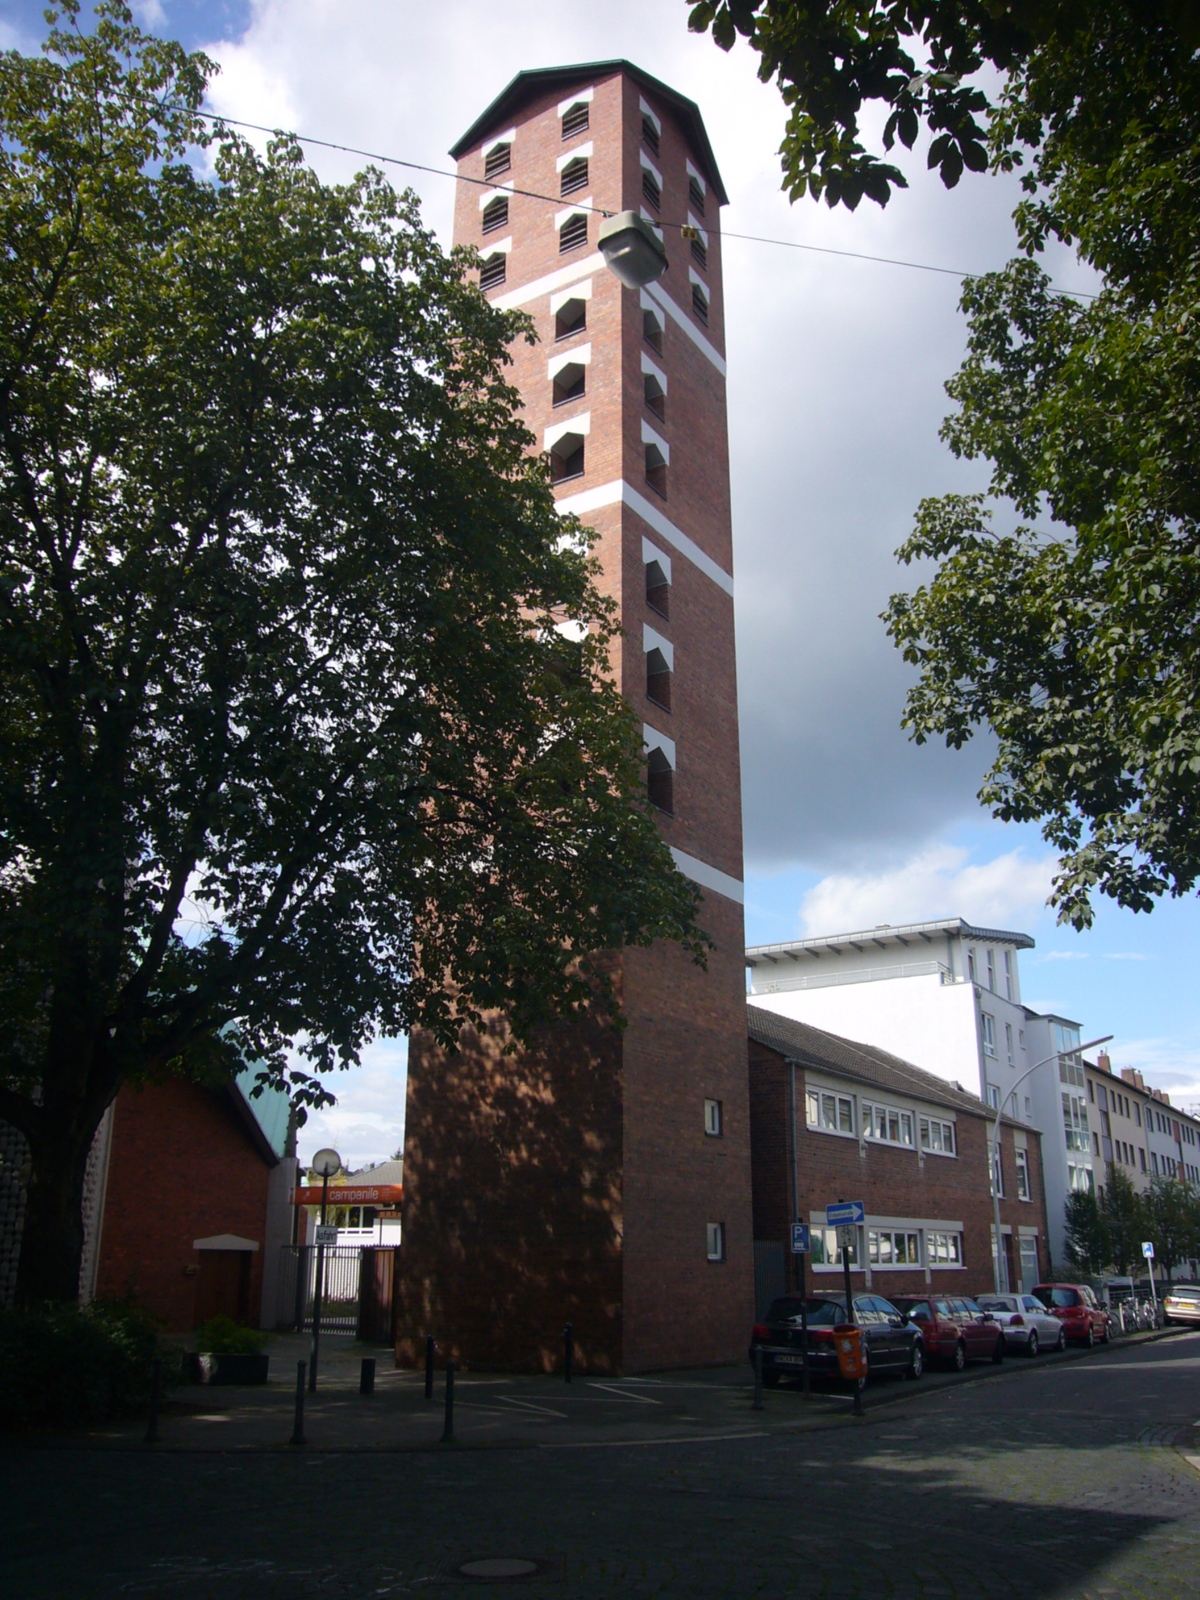 St. Franziskus Glockenturm